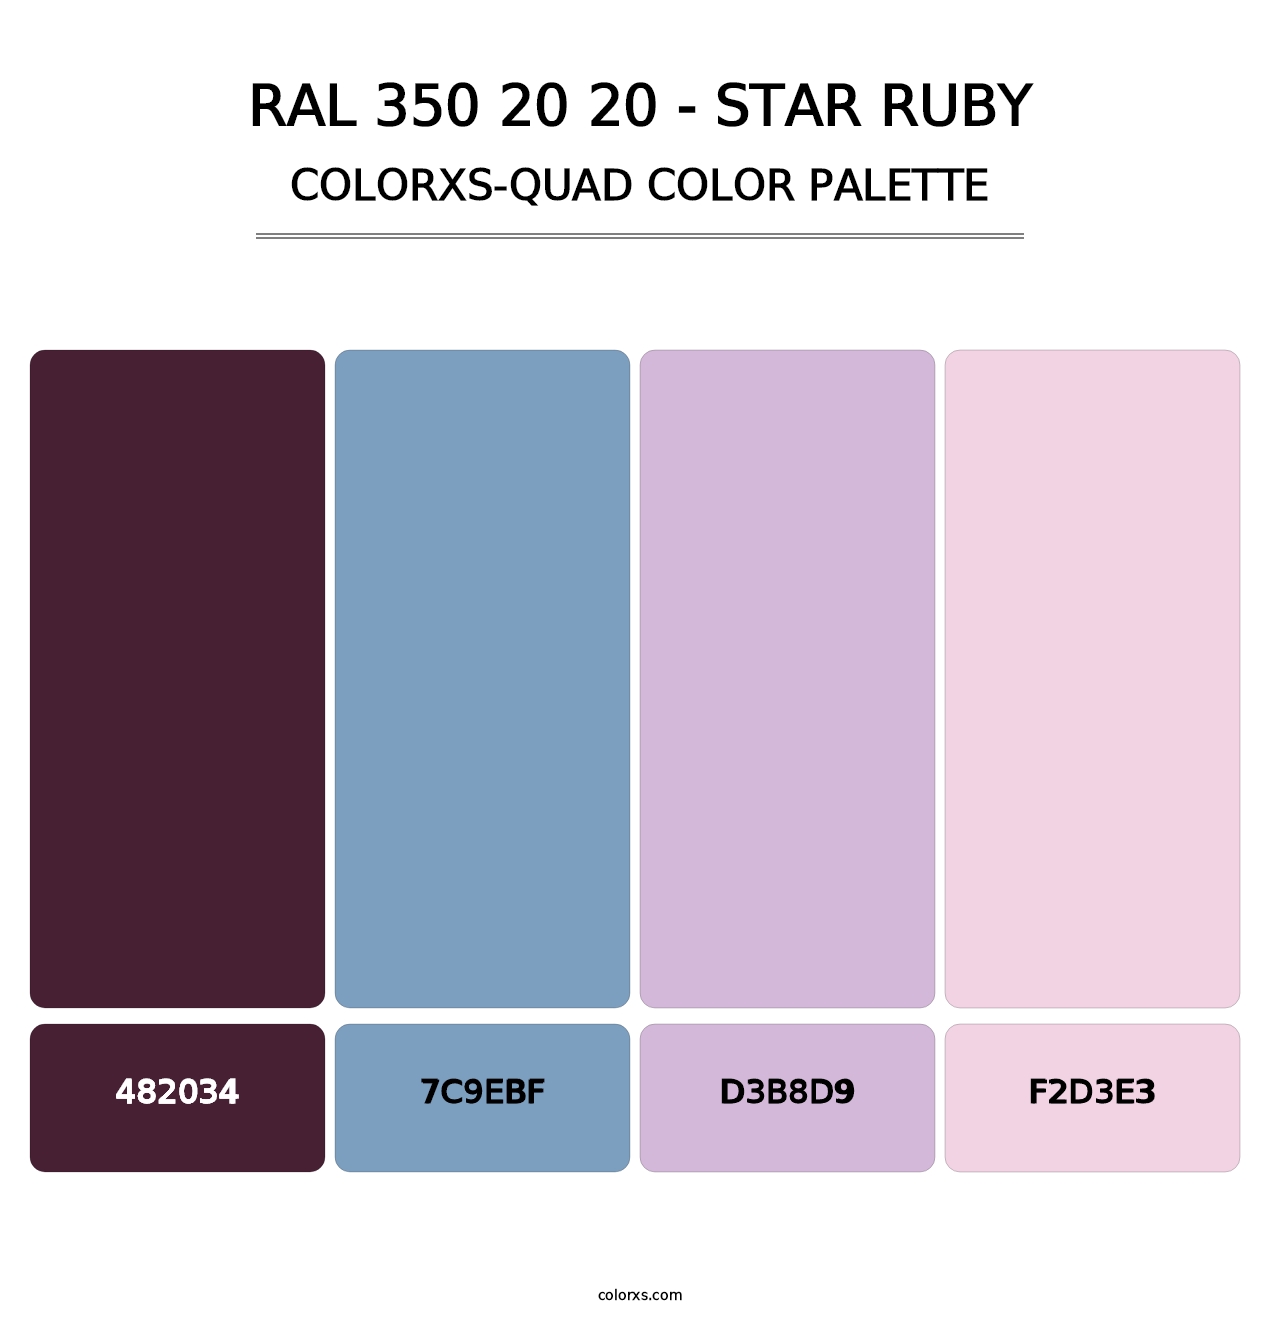 RAL 350 20 20 - Star Ruby - Colorxs Quad Palette